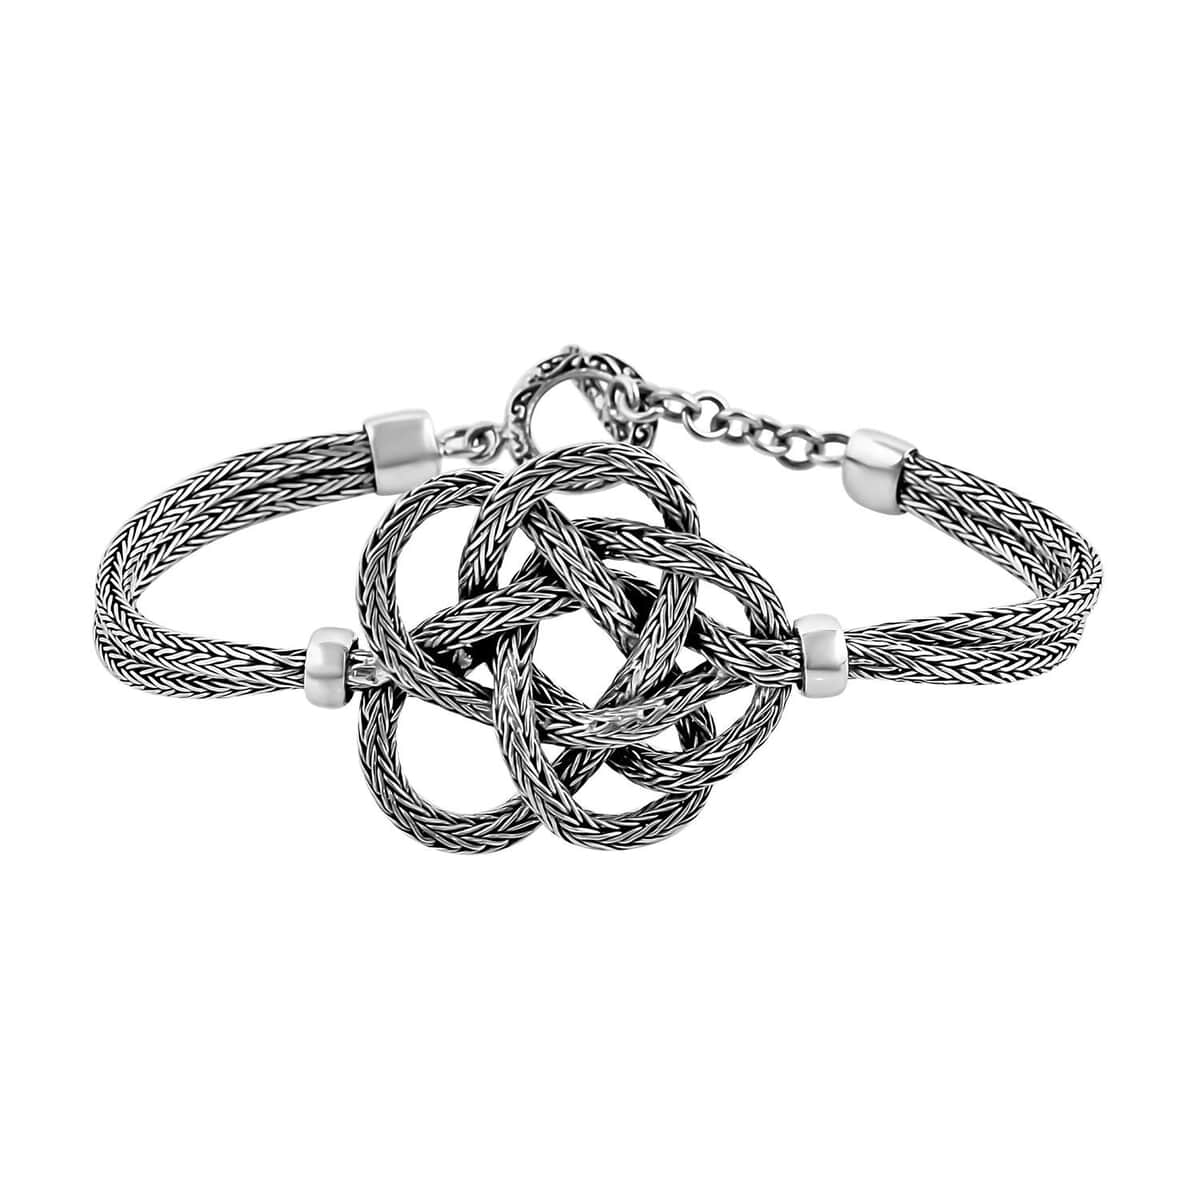 Bali Legacy Sterling Silver Tulang Naga Knot Bracelet (7.25 In) 17.65 Grams image number 0